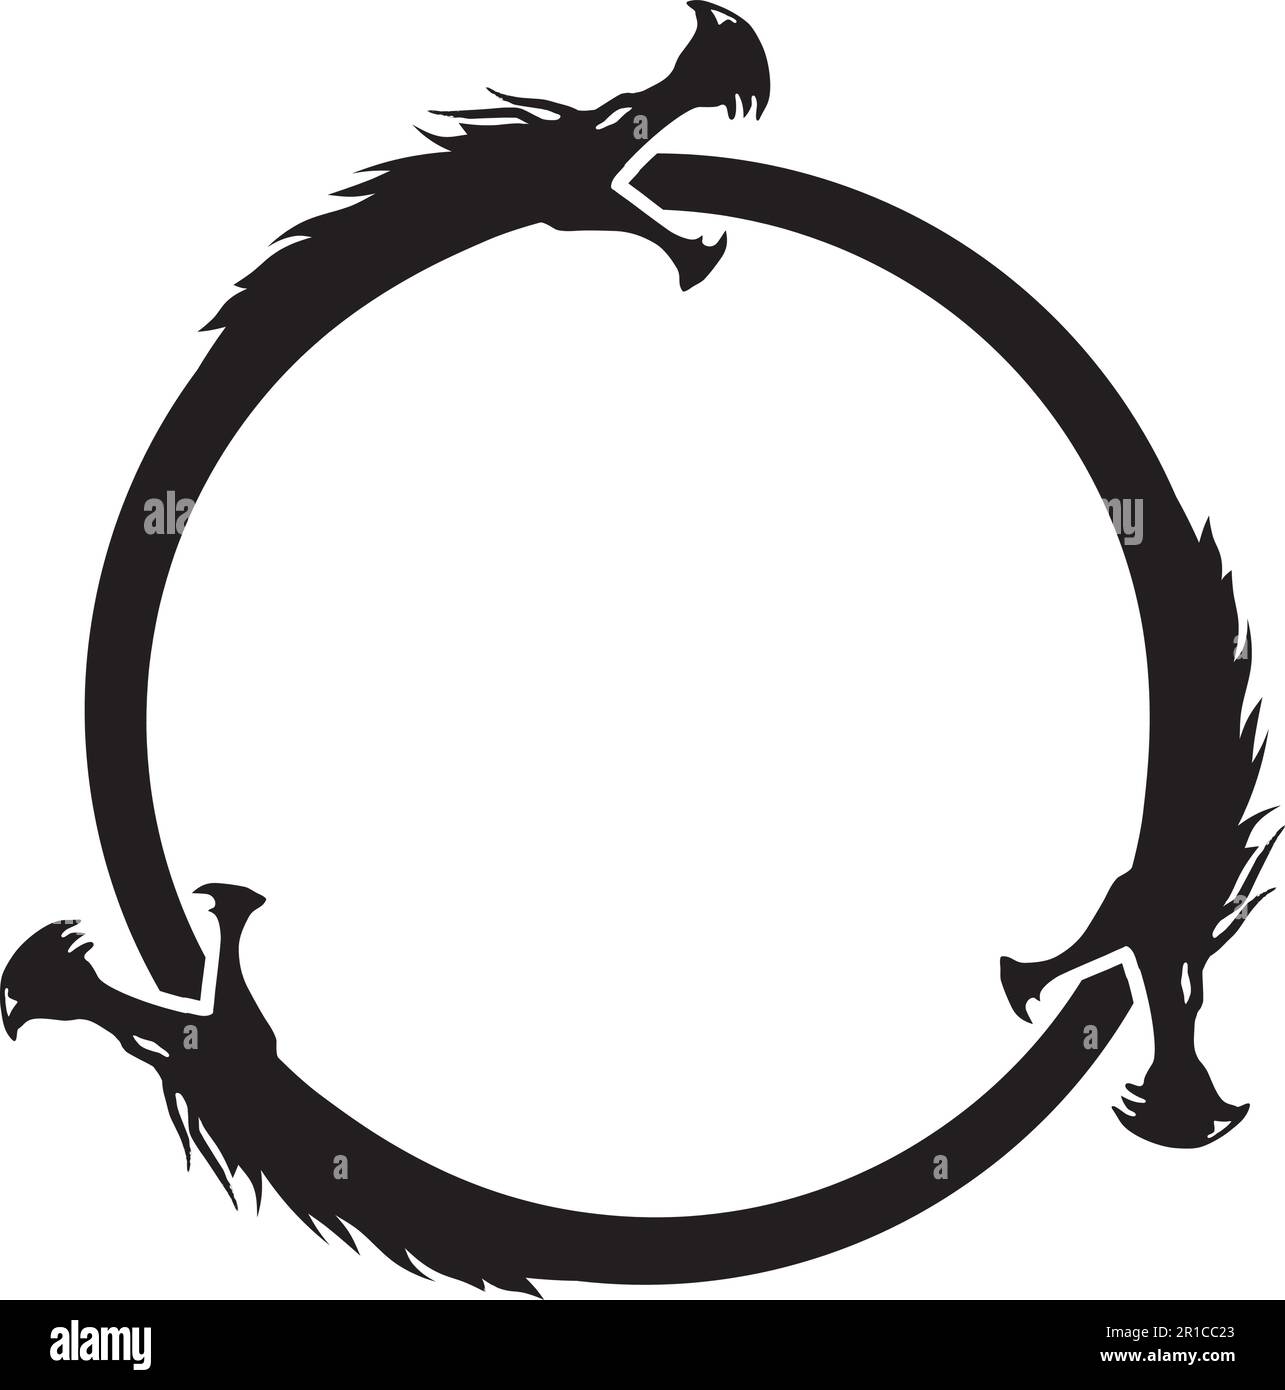 Ouroboros Circle of Three Black Dragons - Tattoo Concept Stock Vector